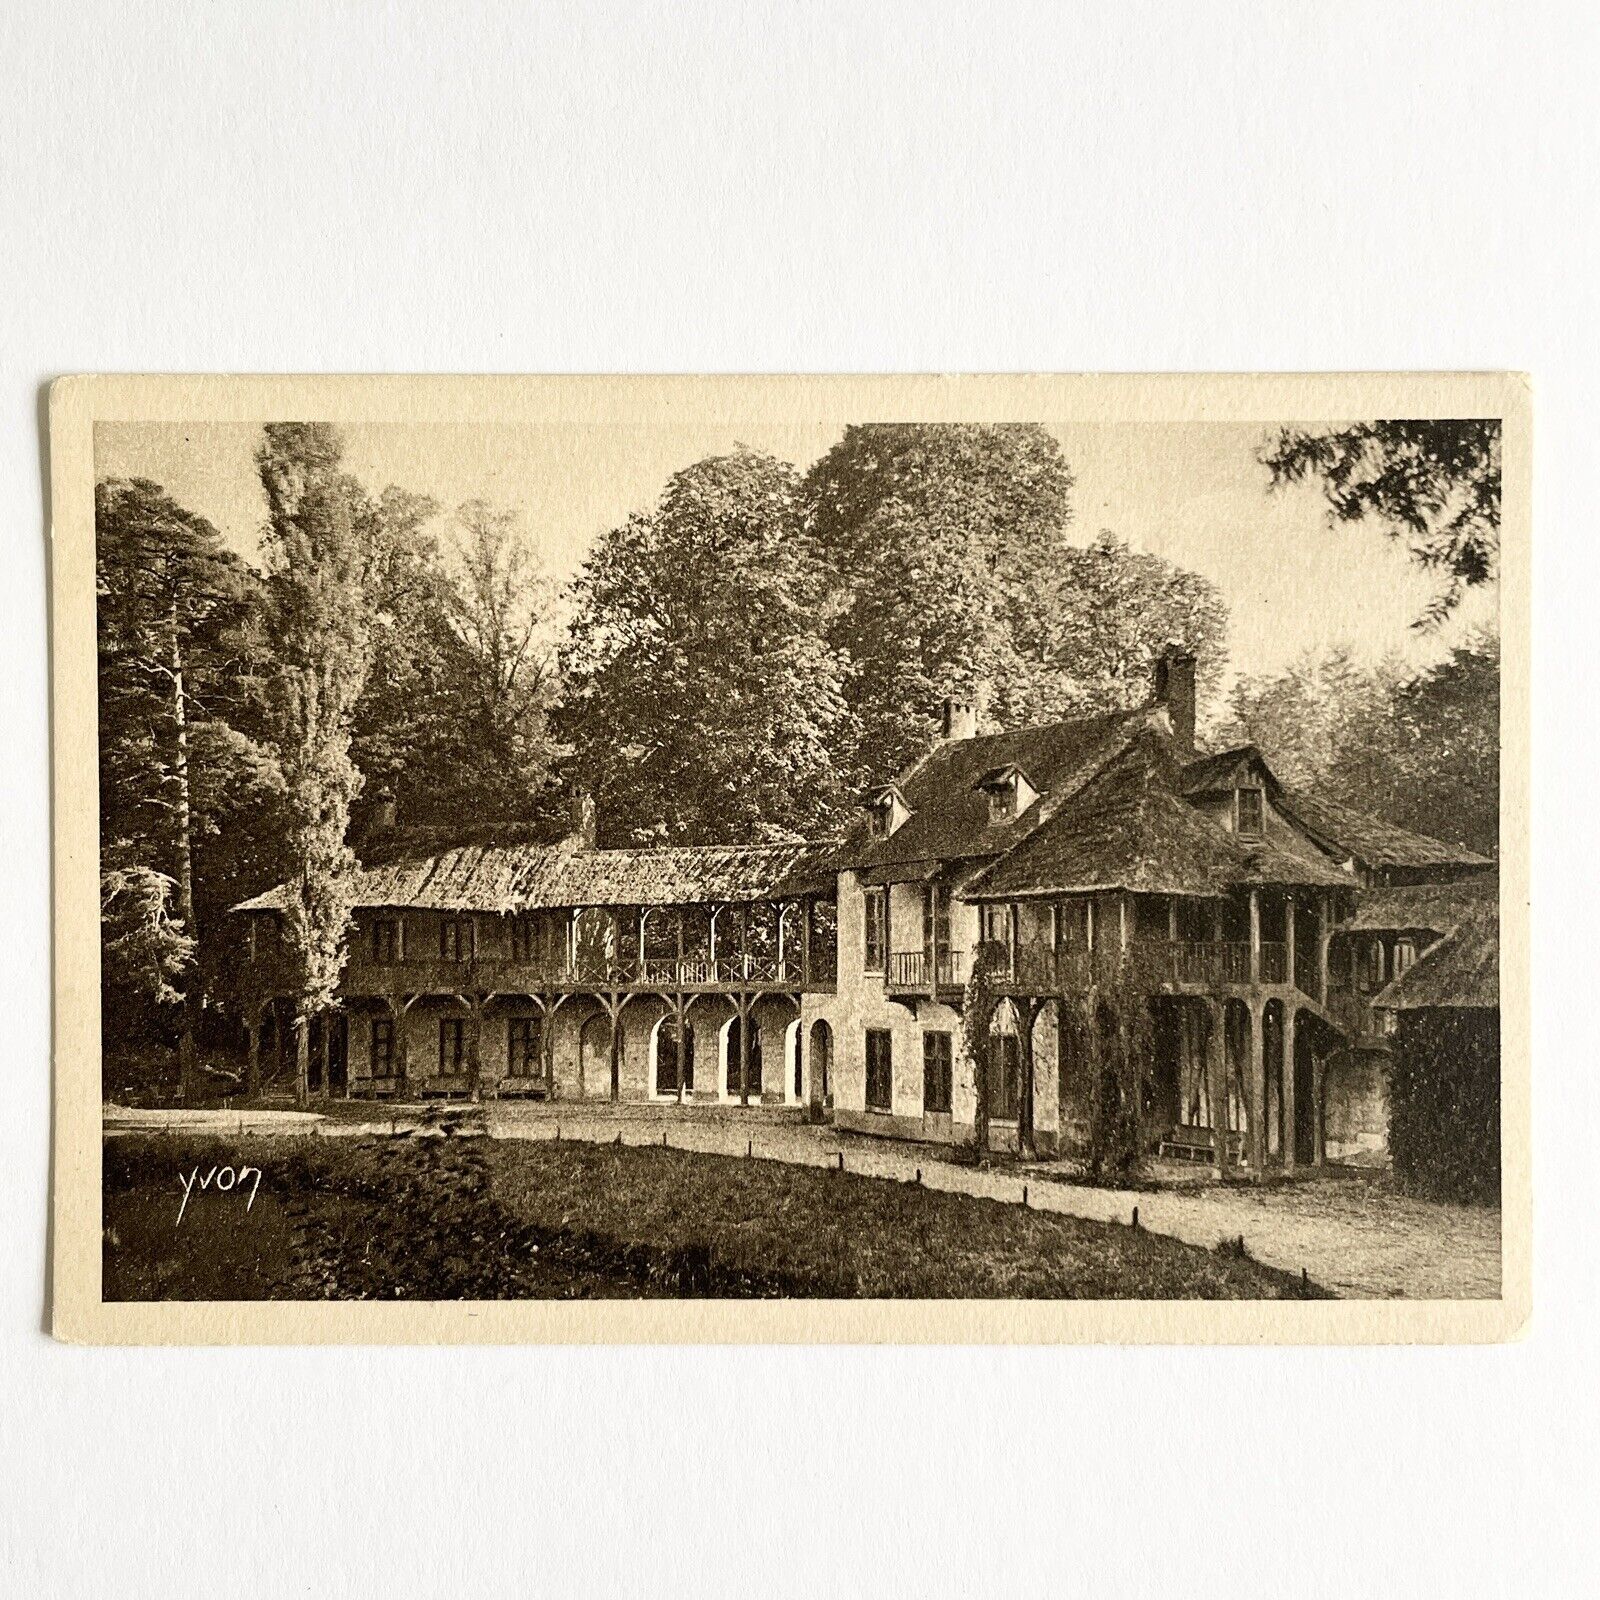 Queen’s Hamlet • Petit Trianon Estate Versailles France • 1913 Yvon Postcard